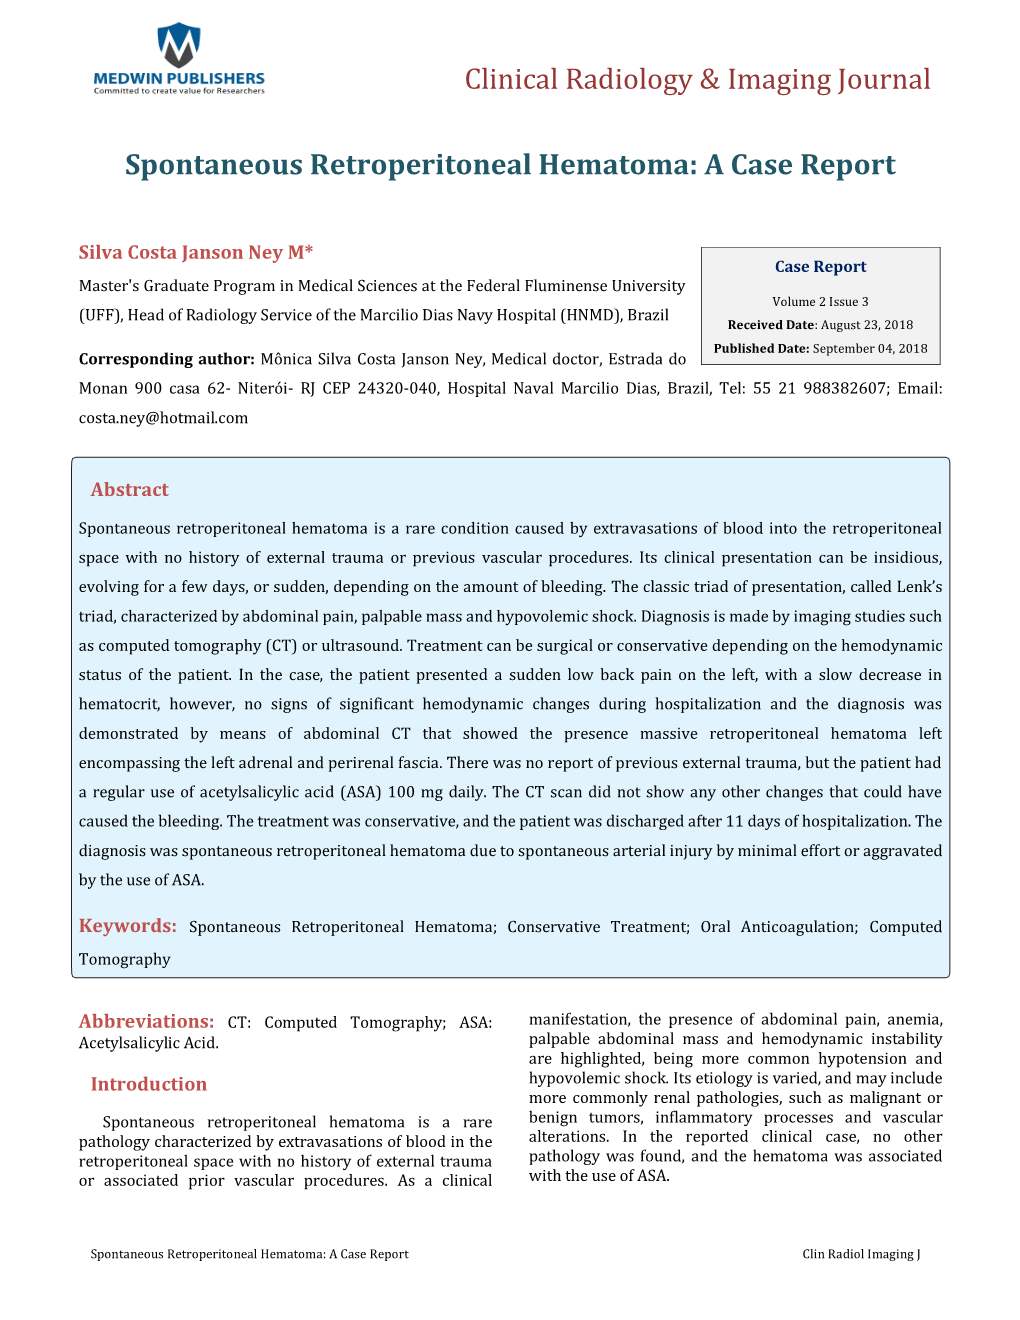 Spontaneous Retroperitoneal Hematoma: a Case Report